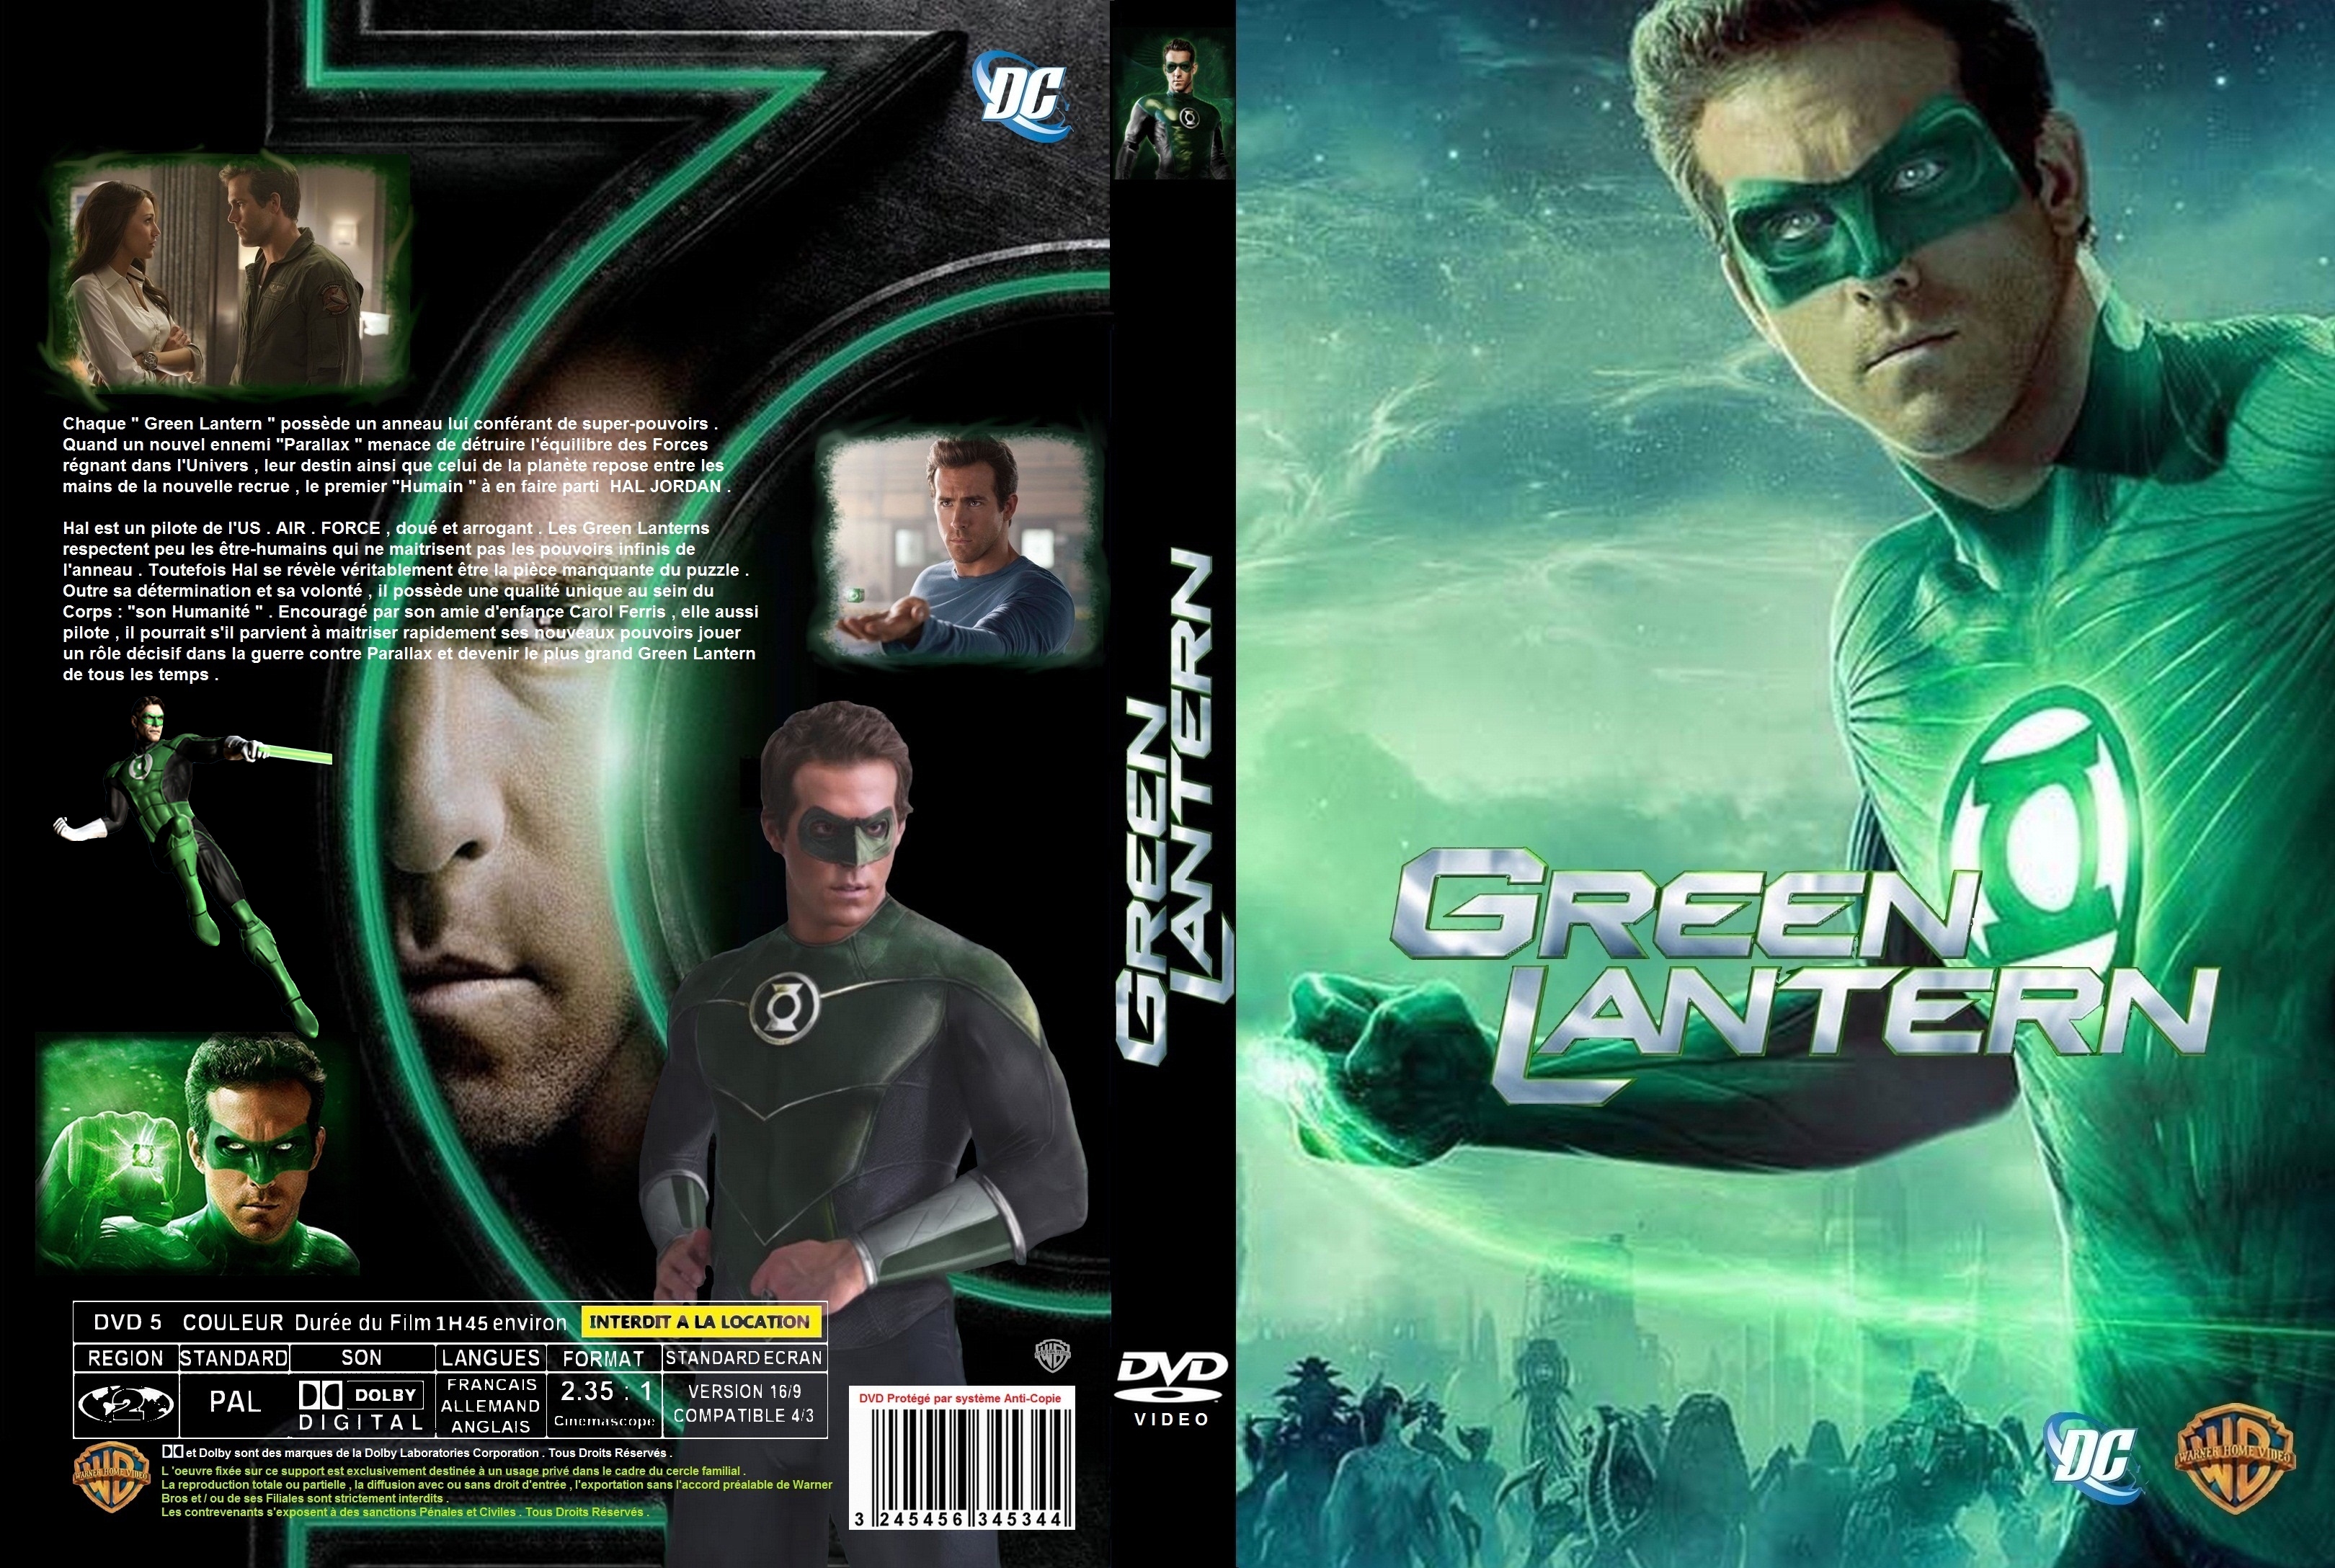 Jaquette DVD Green Lantern custom v2